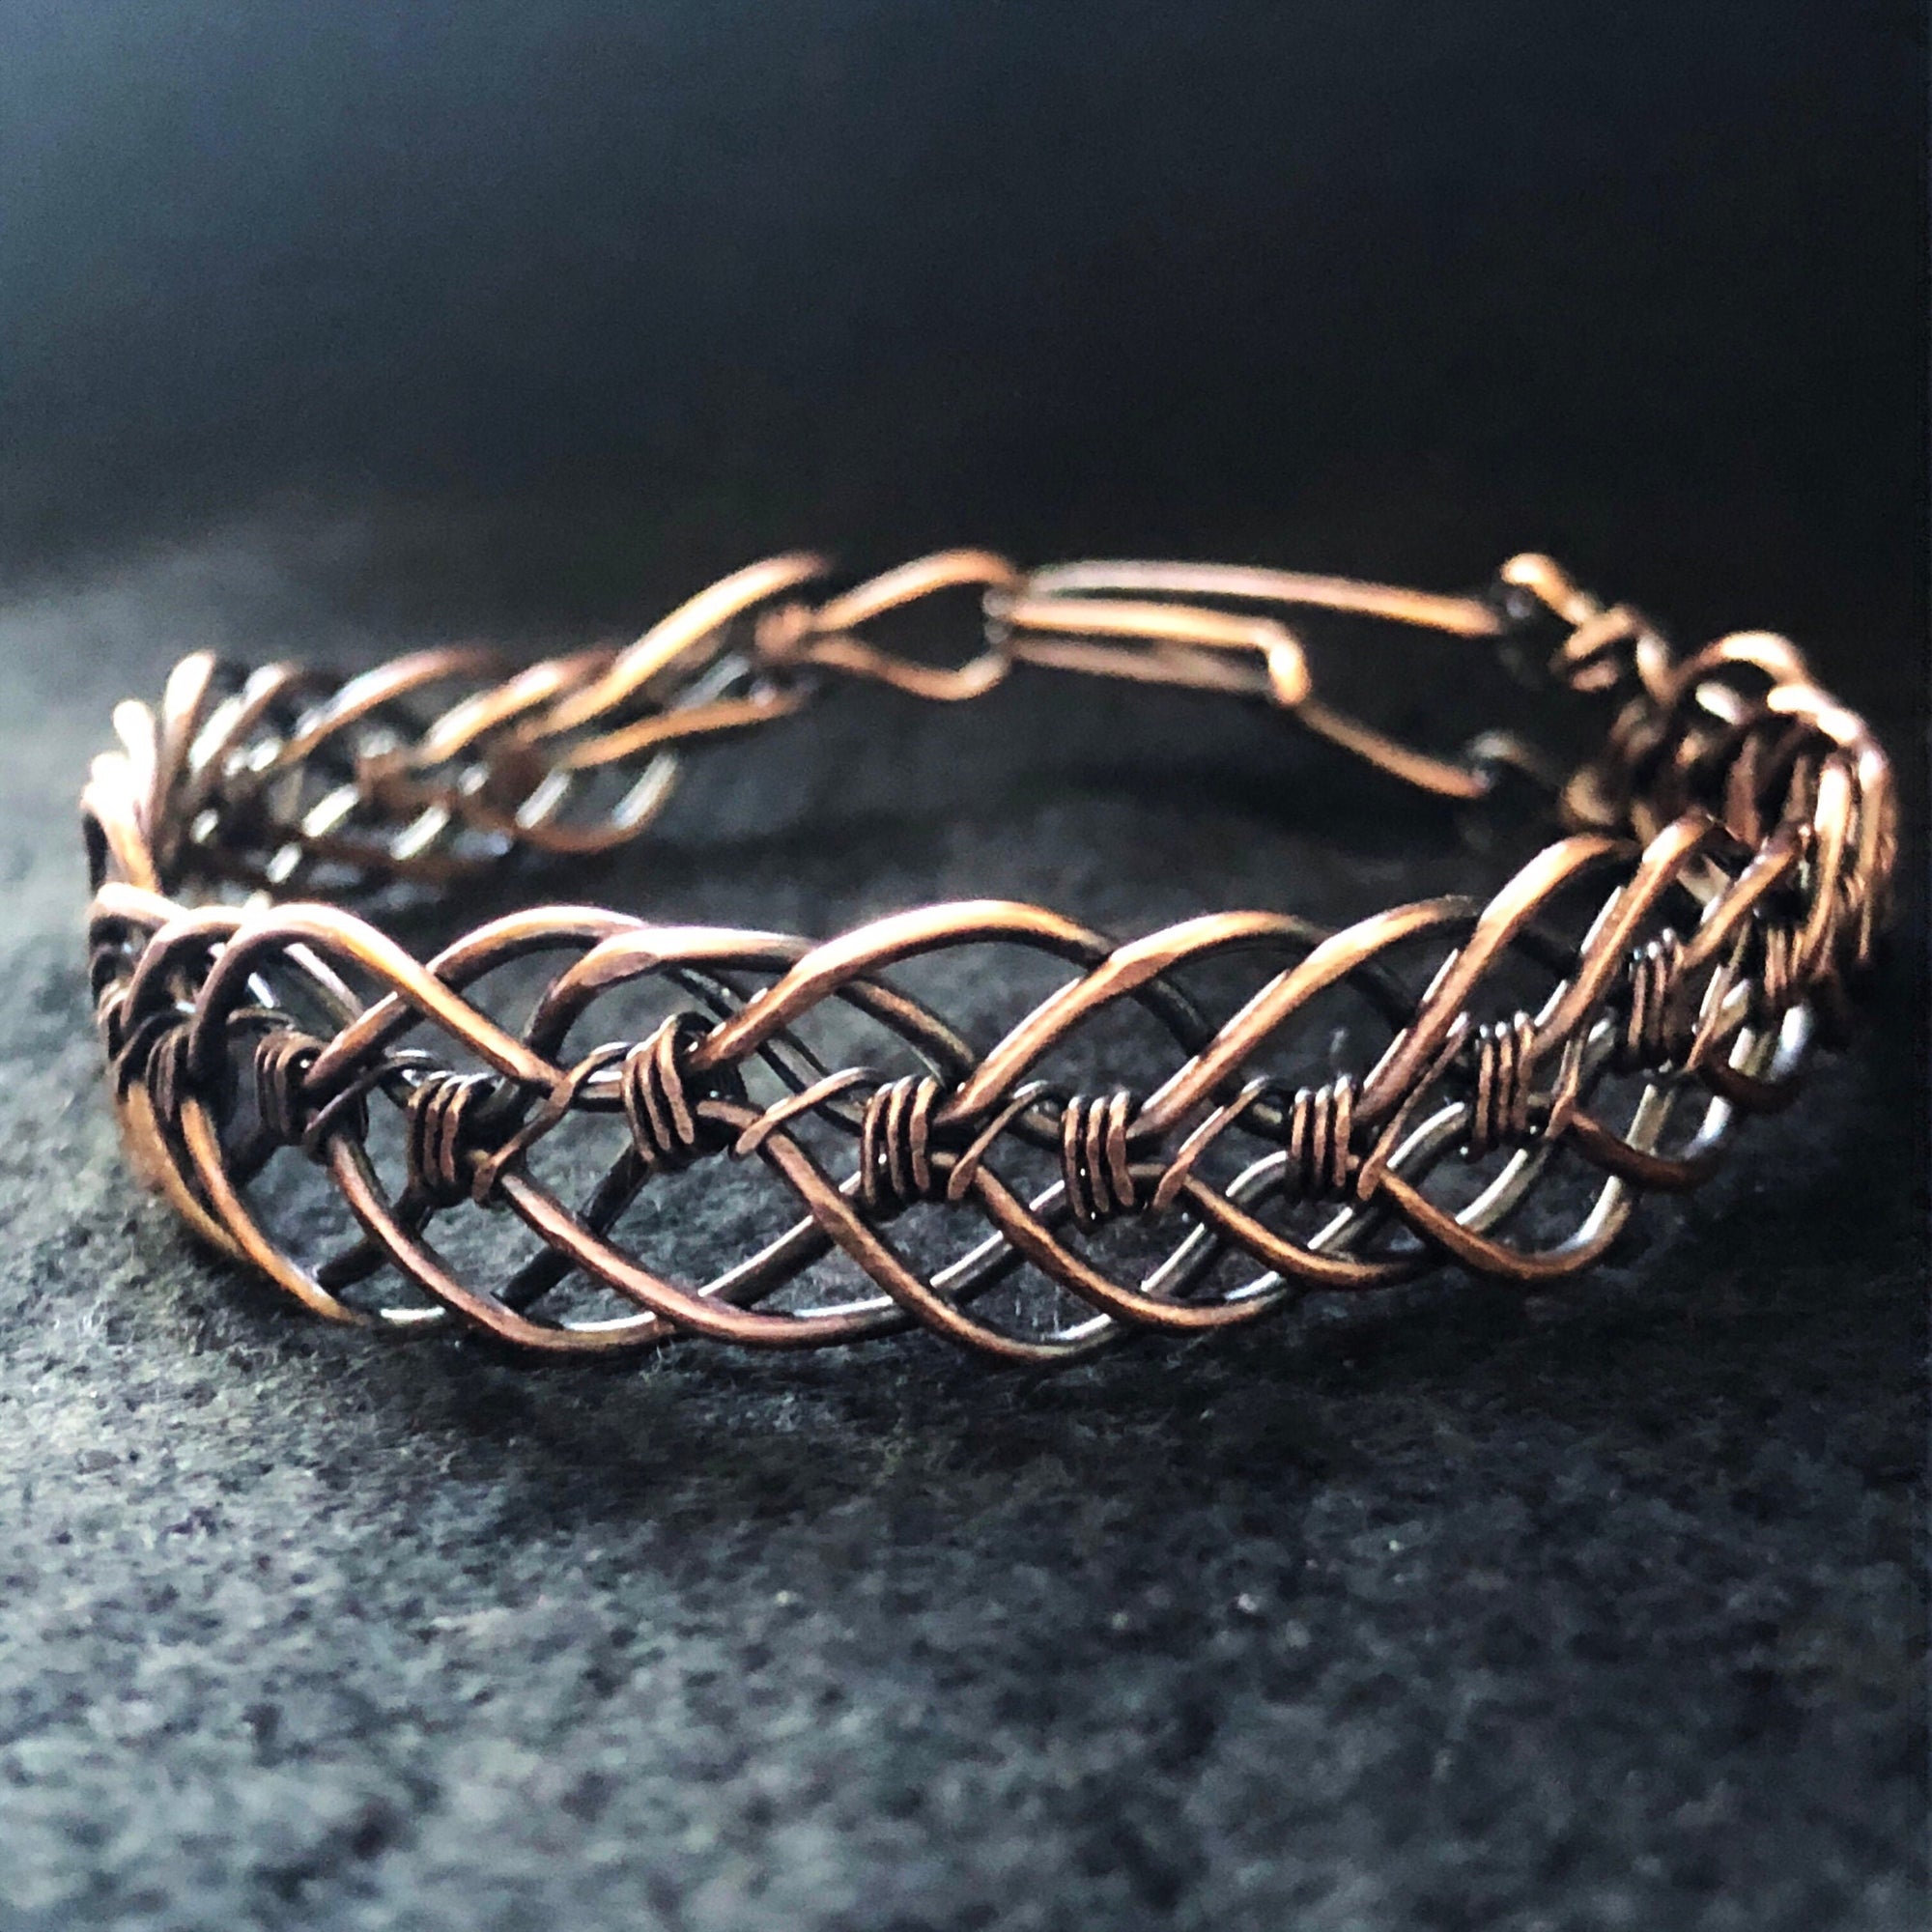 Unisex silver weave braided bracelet